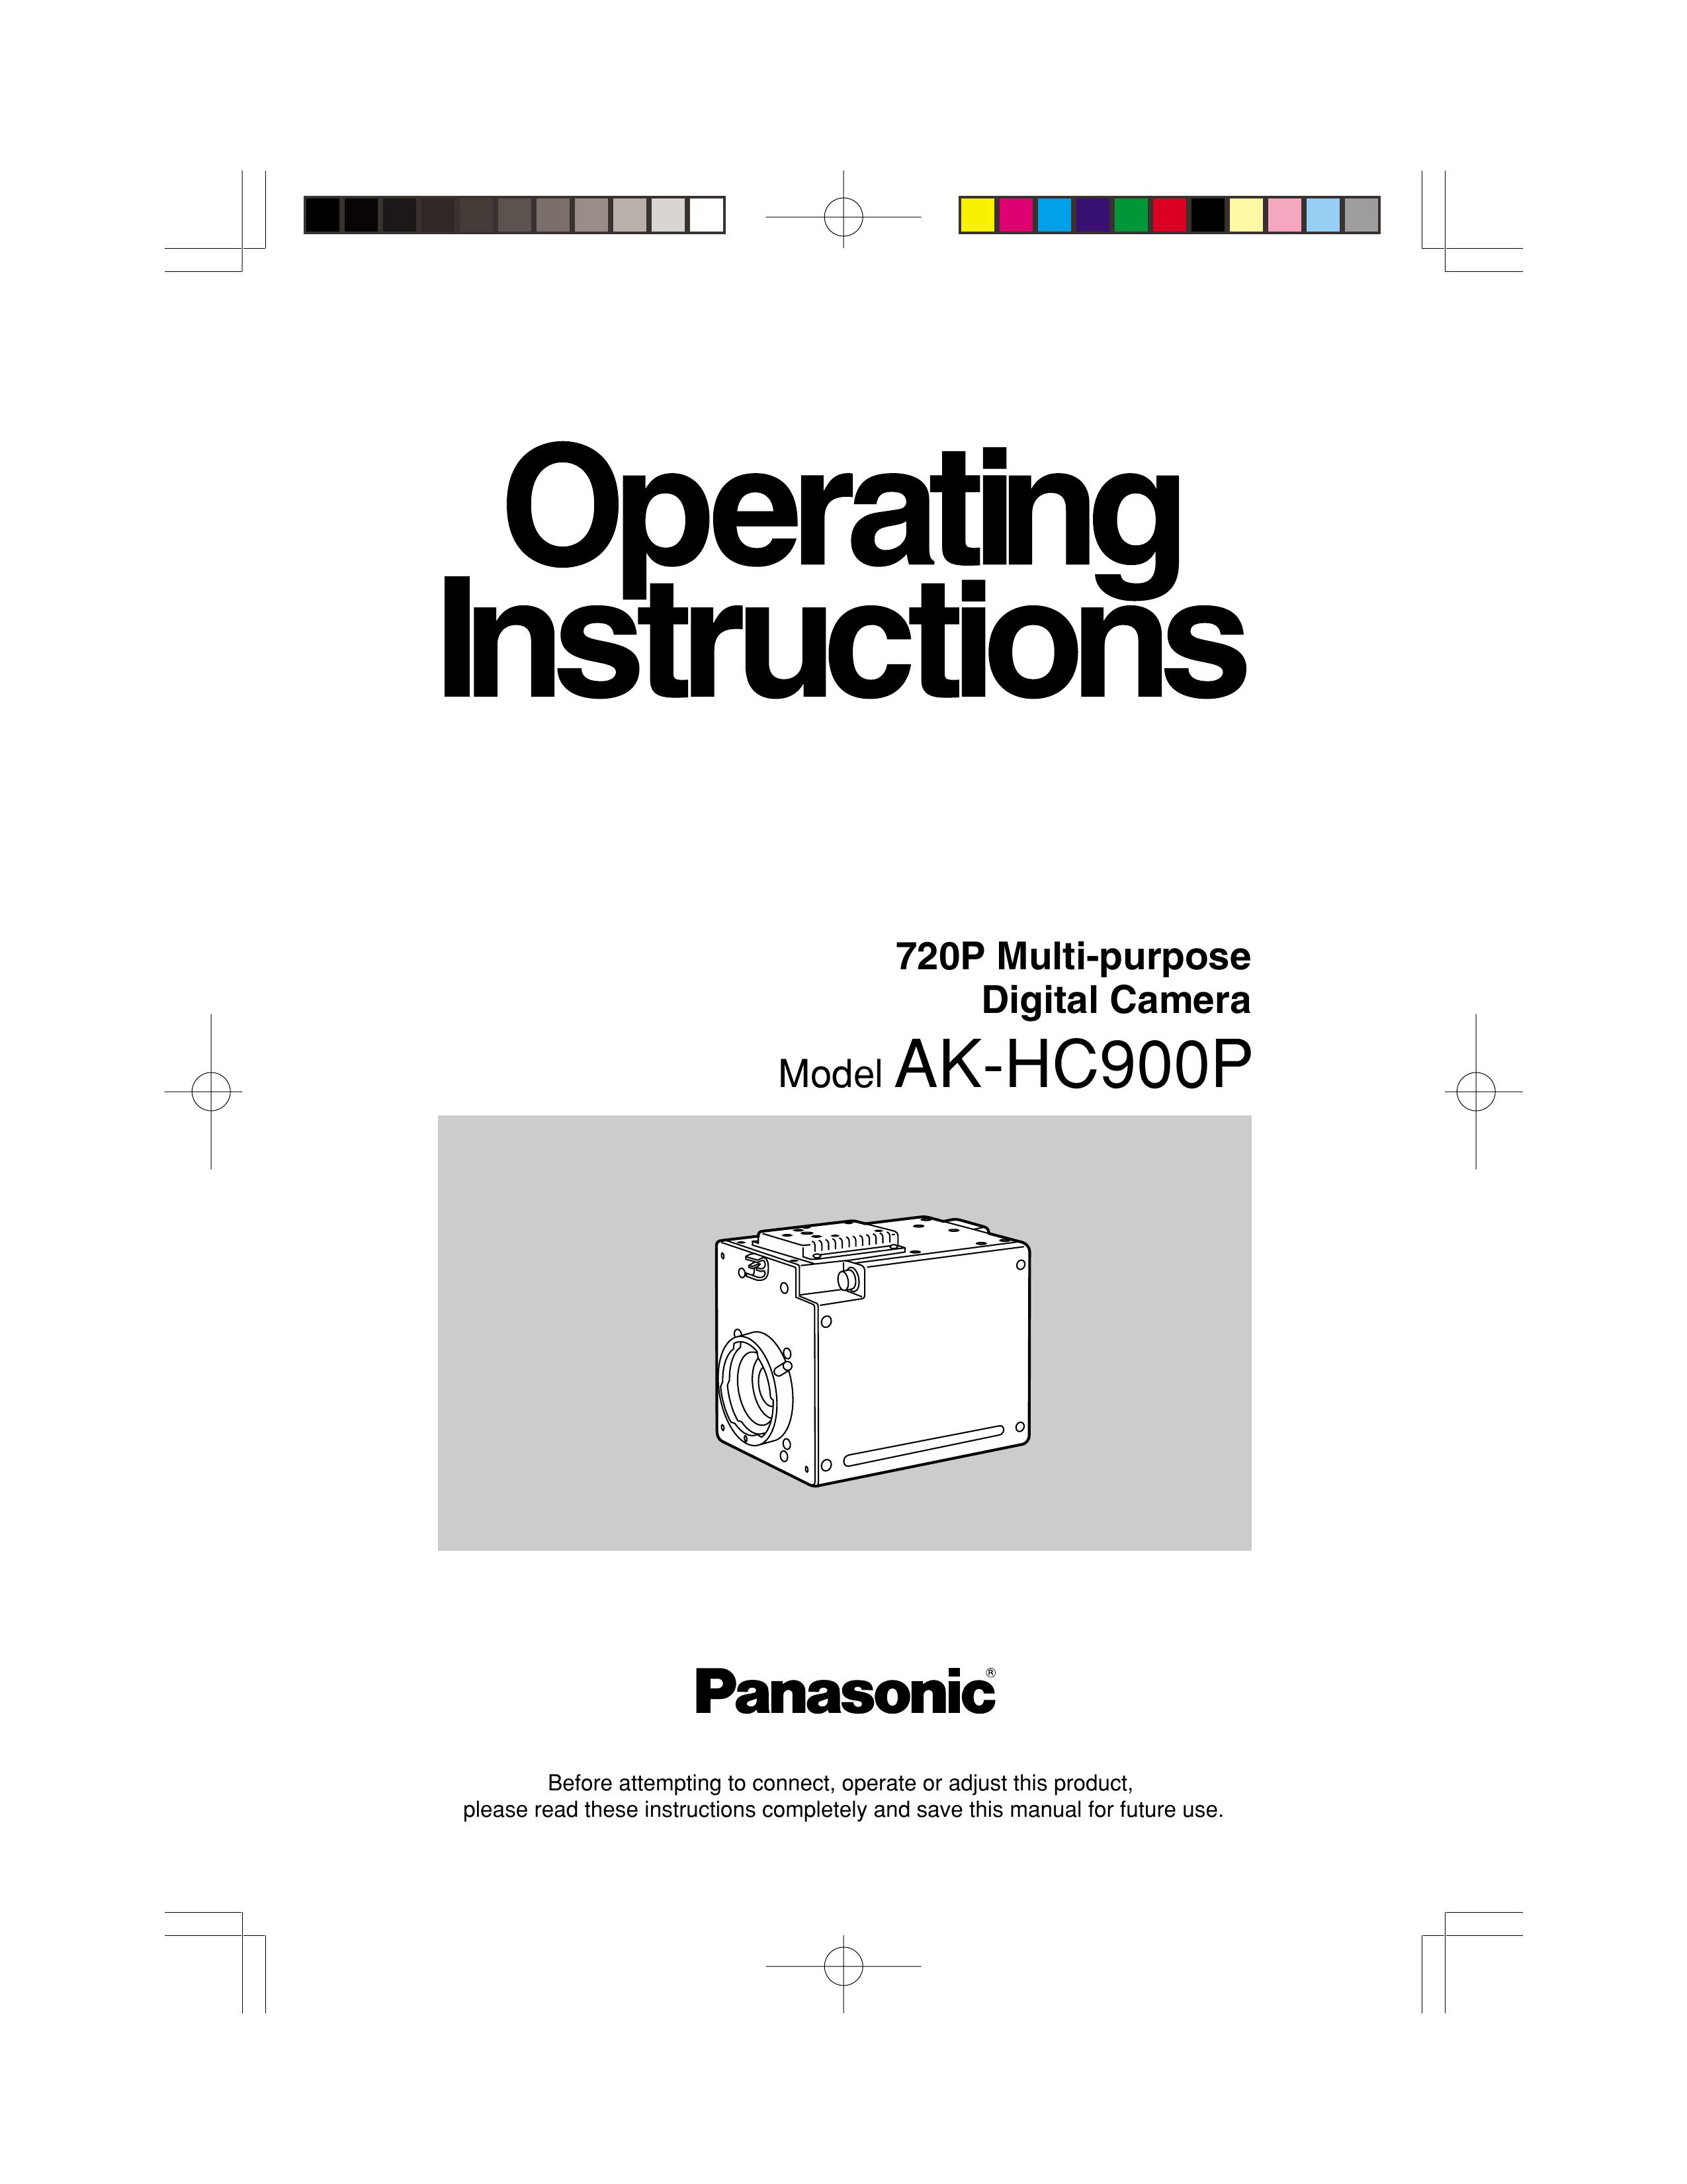 Panasonic AK-HC900P Digital Camera User Manual